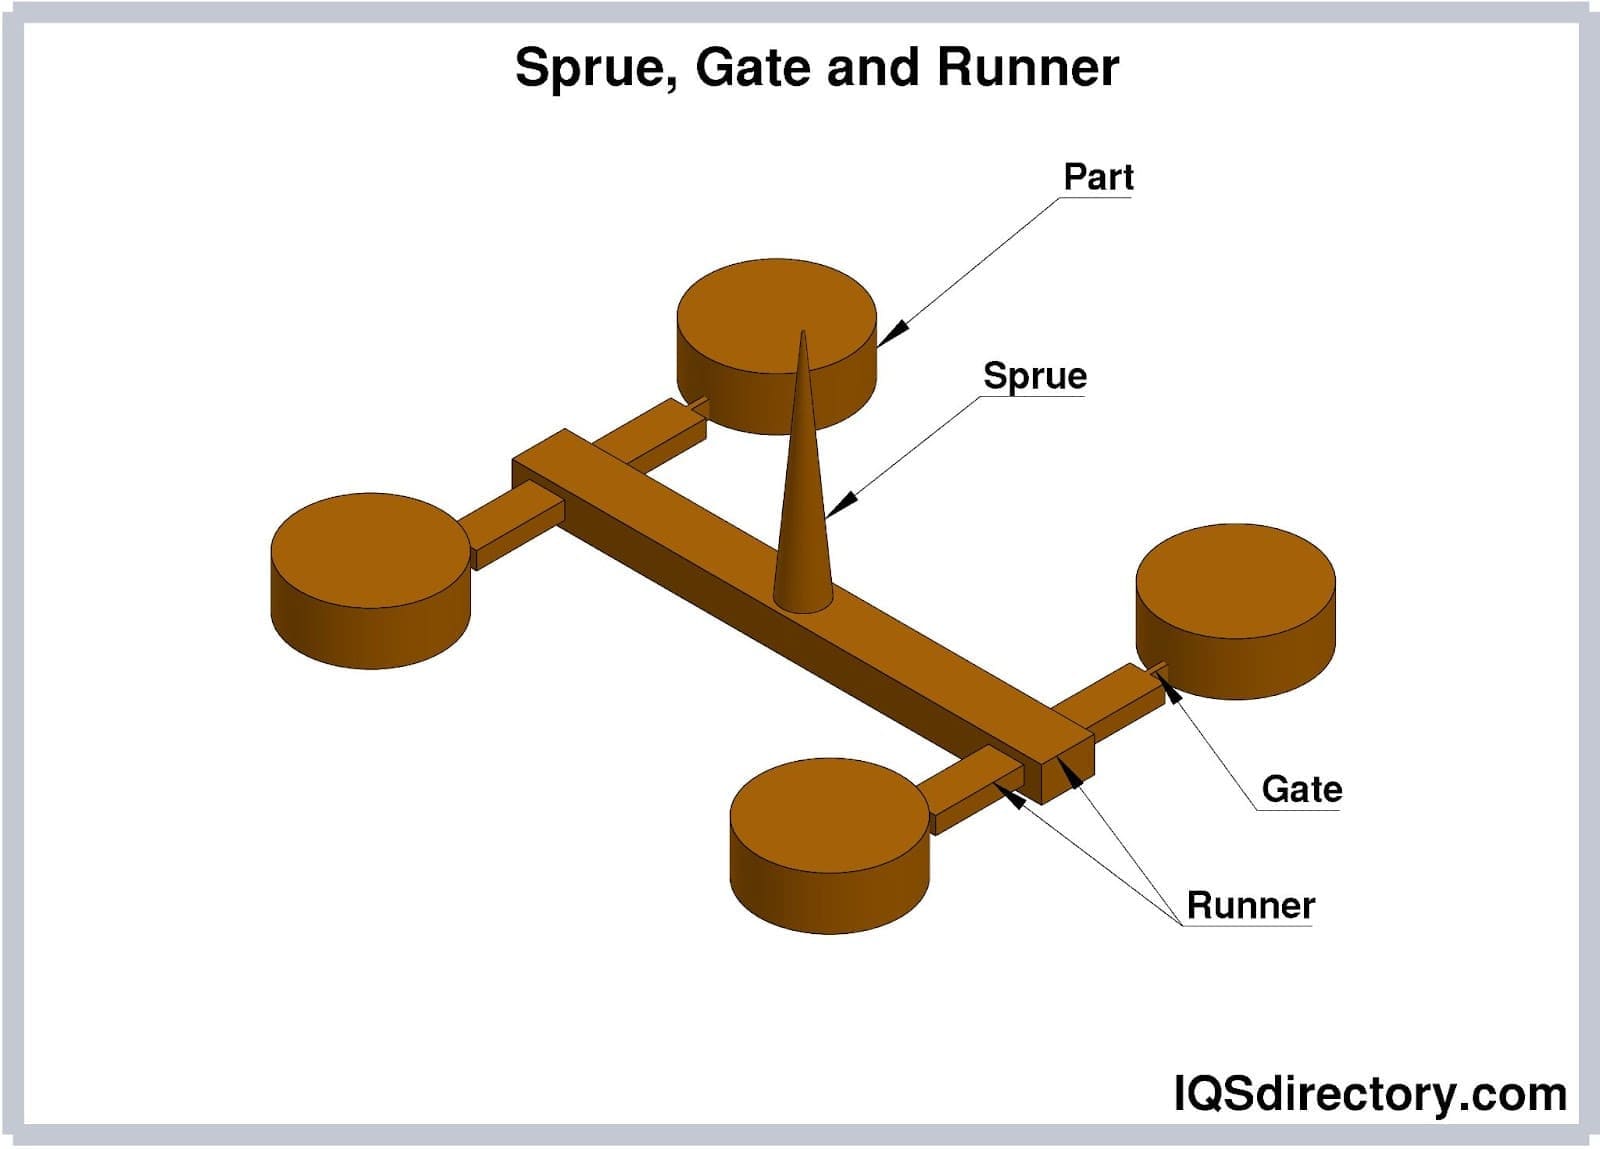 Sprue, Gate, and Runner